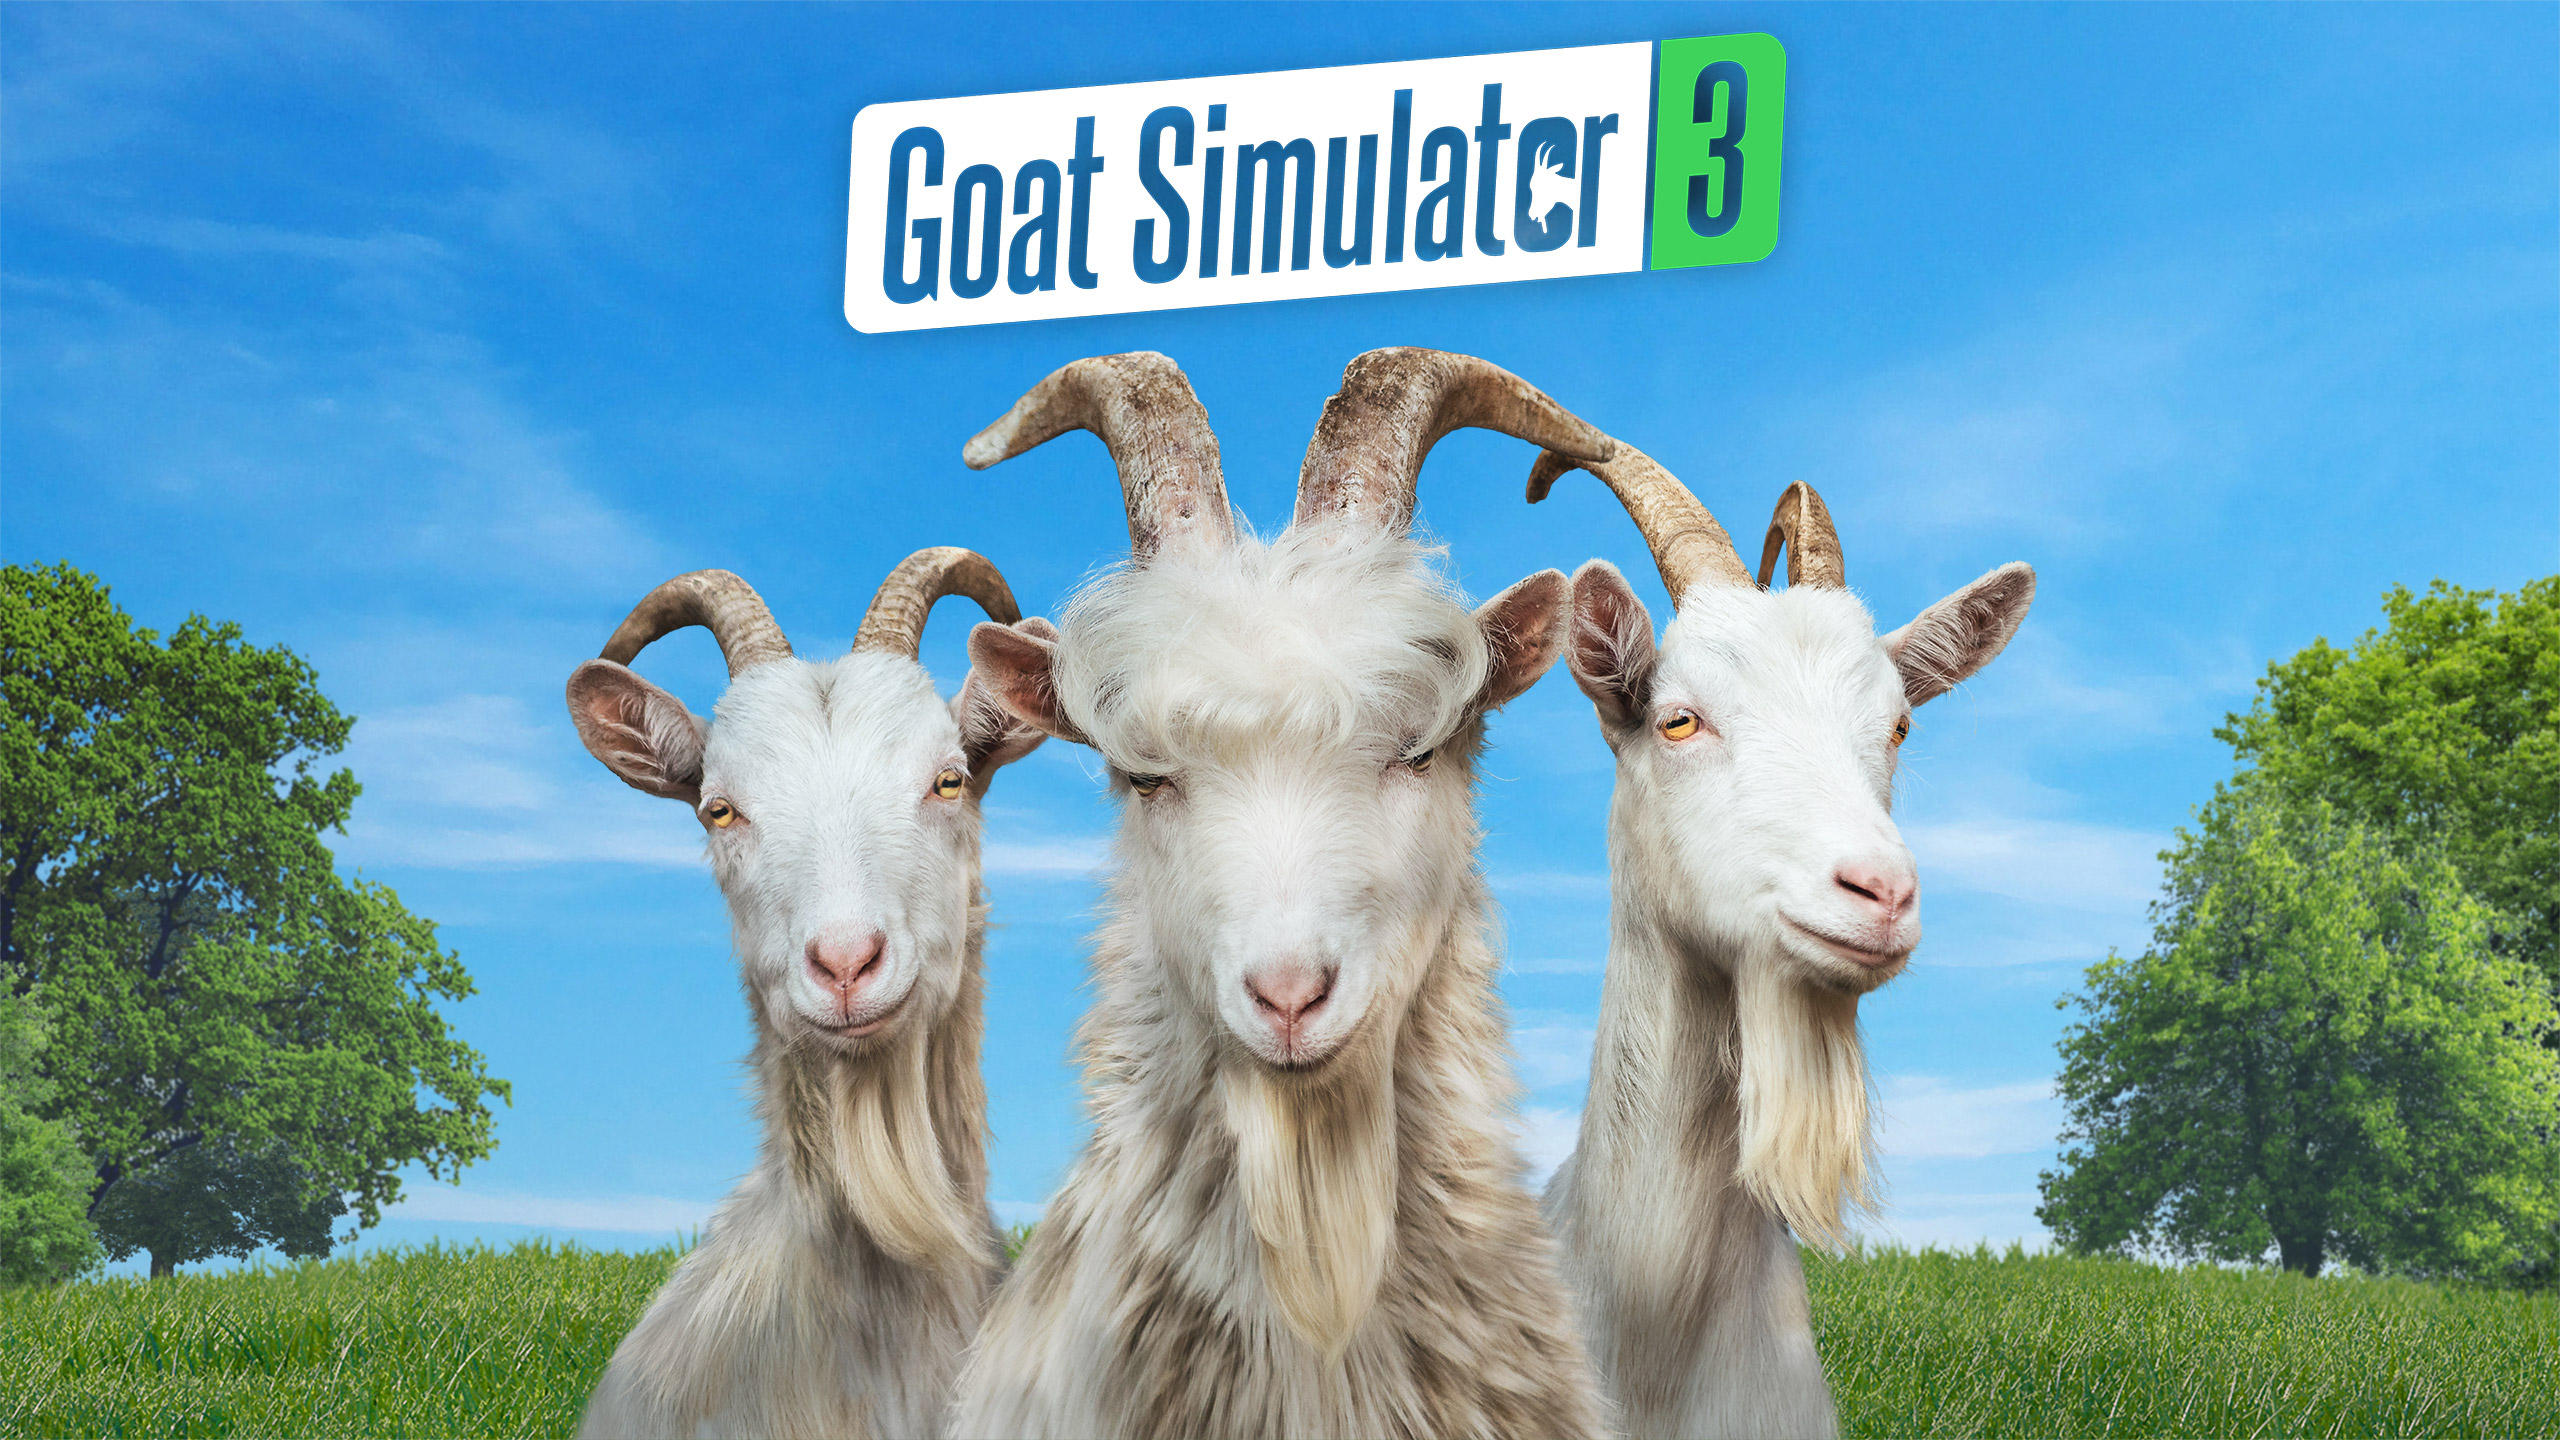 Goat Simulator 3 has a Star Wars Easter egg